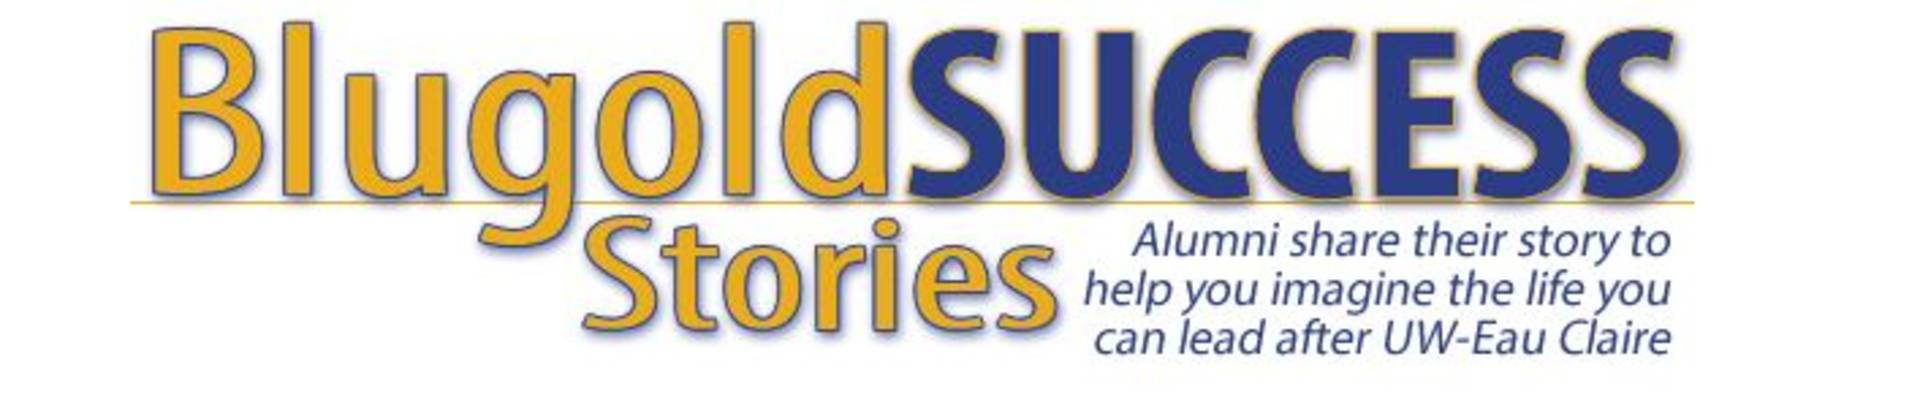 Blugold Success Stories blog logo image, full width 